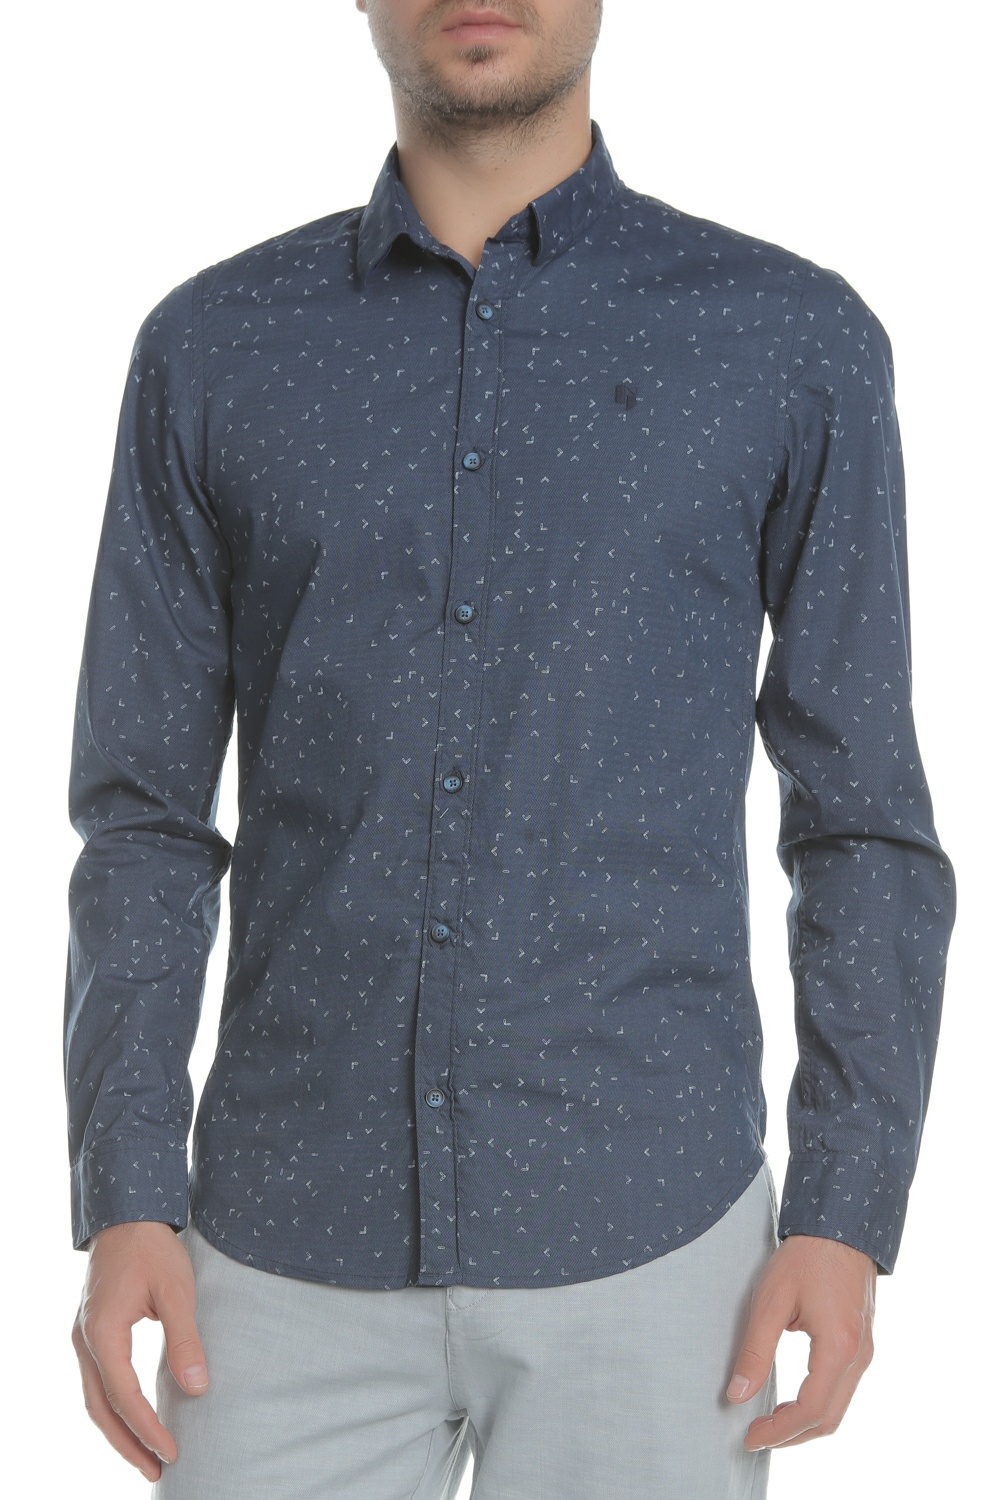 GARCIA JEANS - Ανδρικό μακρυμάνικο πουκάμισο GARCIA JEANS μπλε με print Ανδρικά/Ρούχα/Πουκάμισα/Μακρυμάνικα